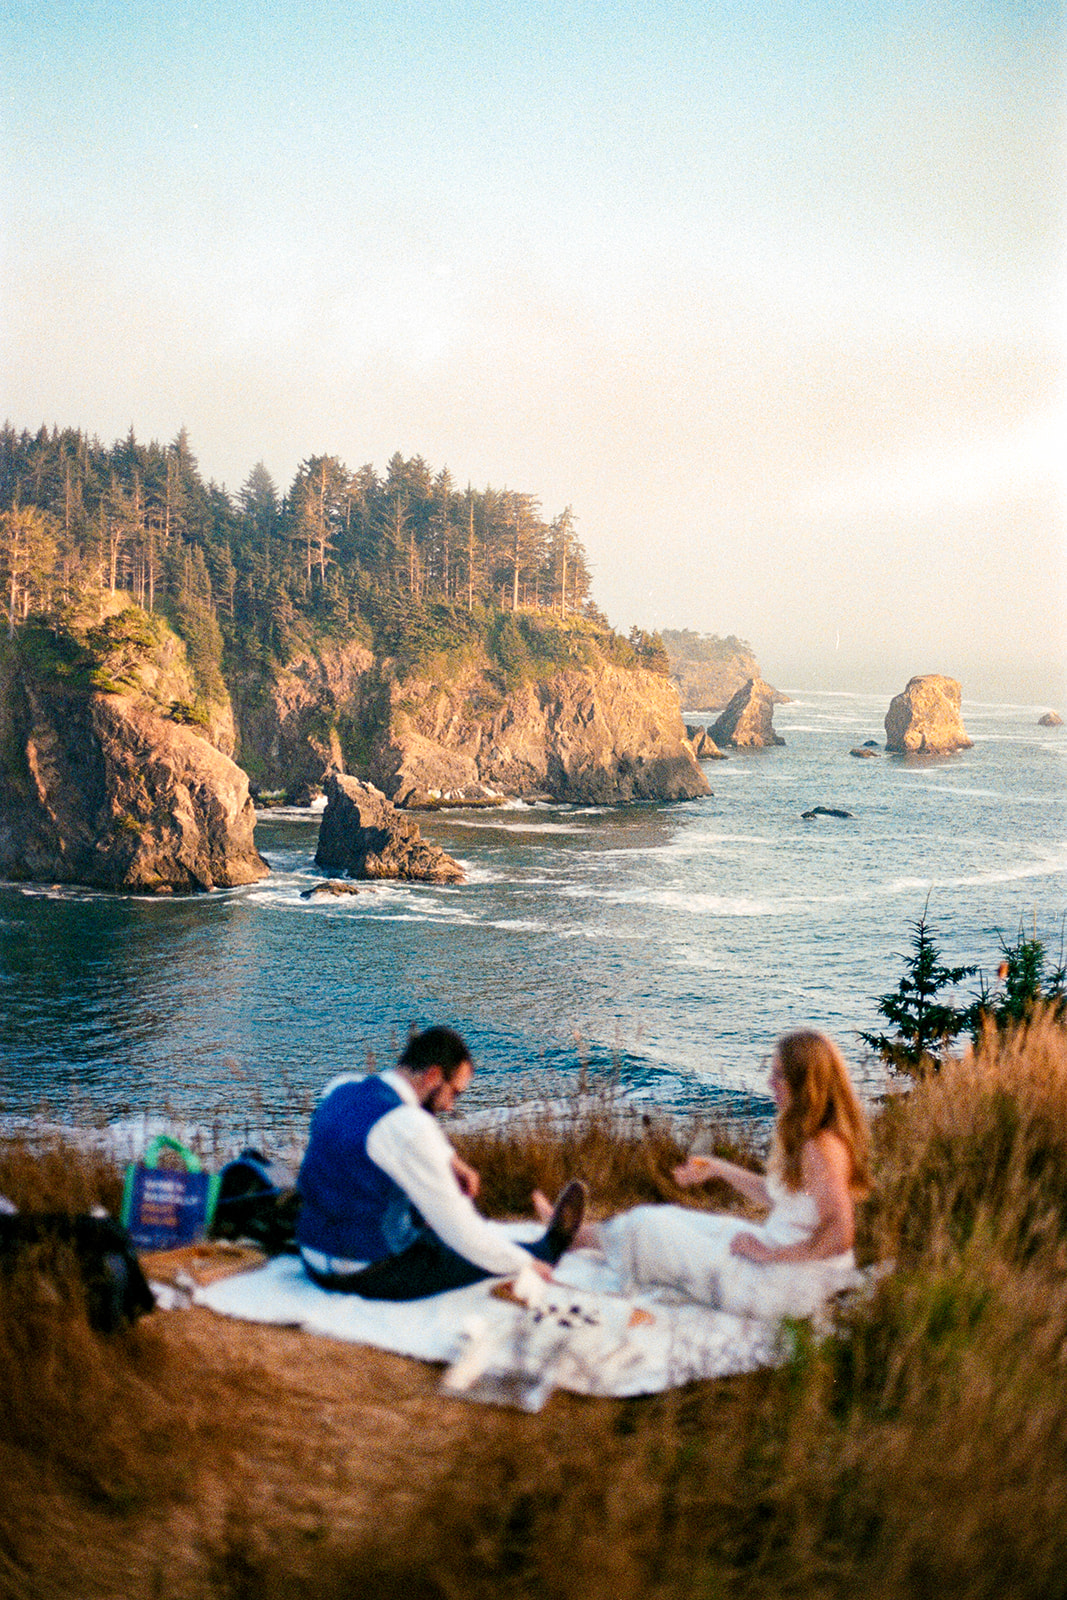 Oregon Coast picnic elopement on 35mm film